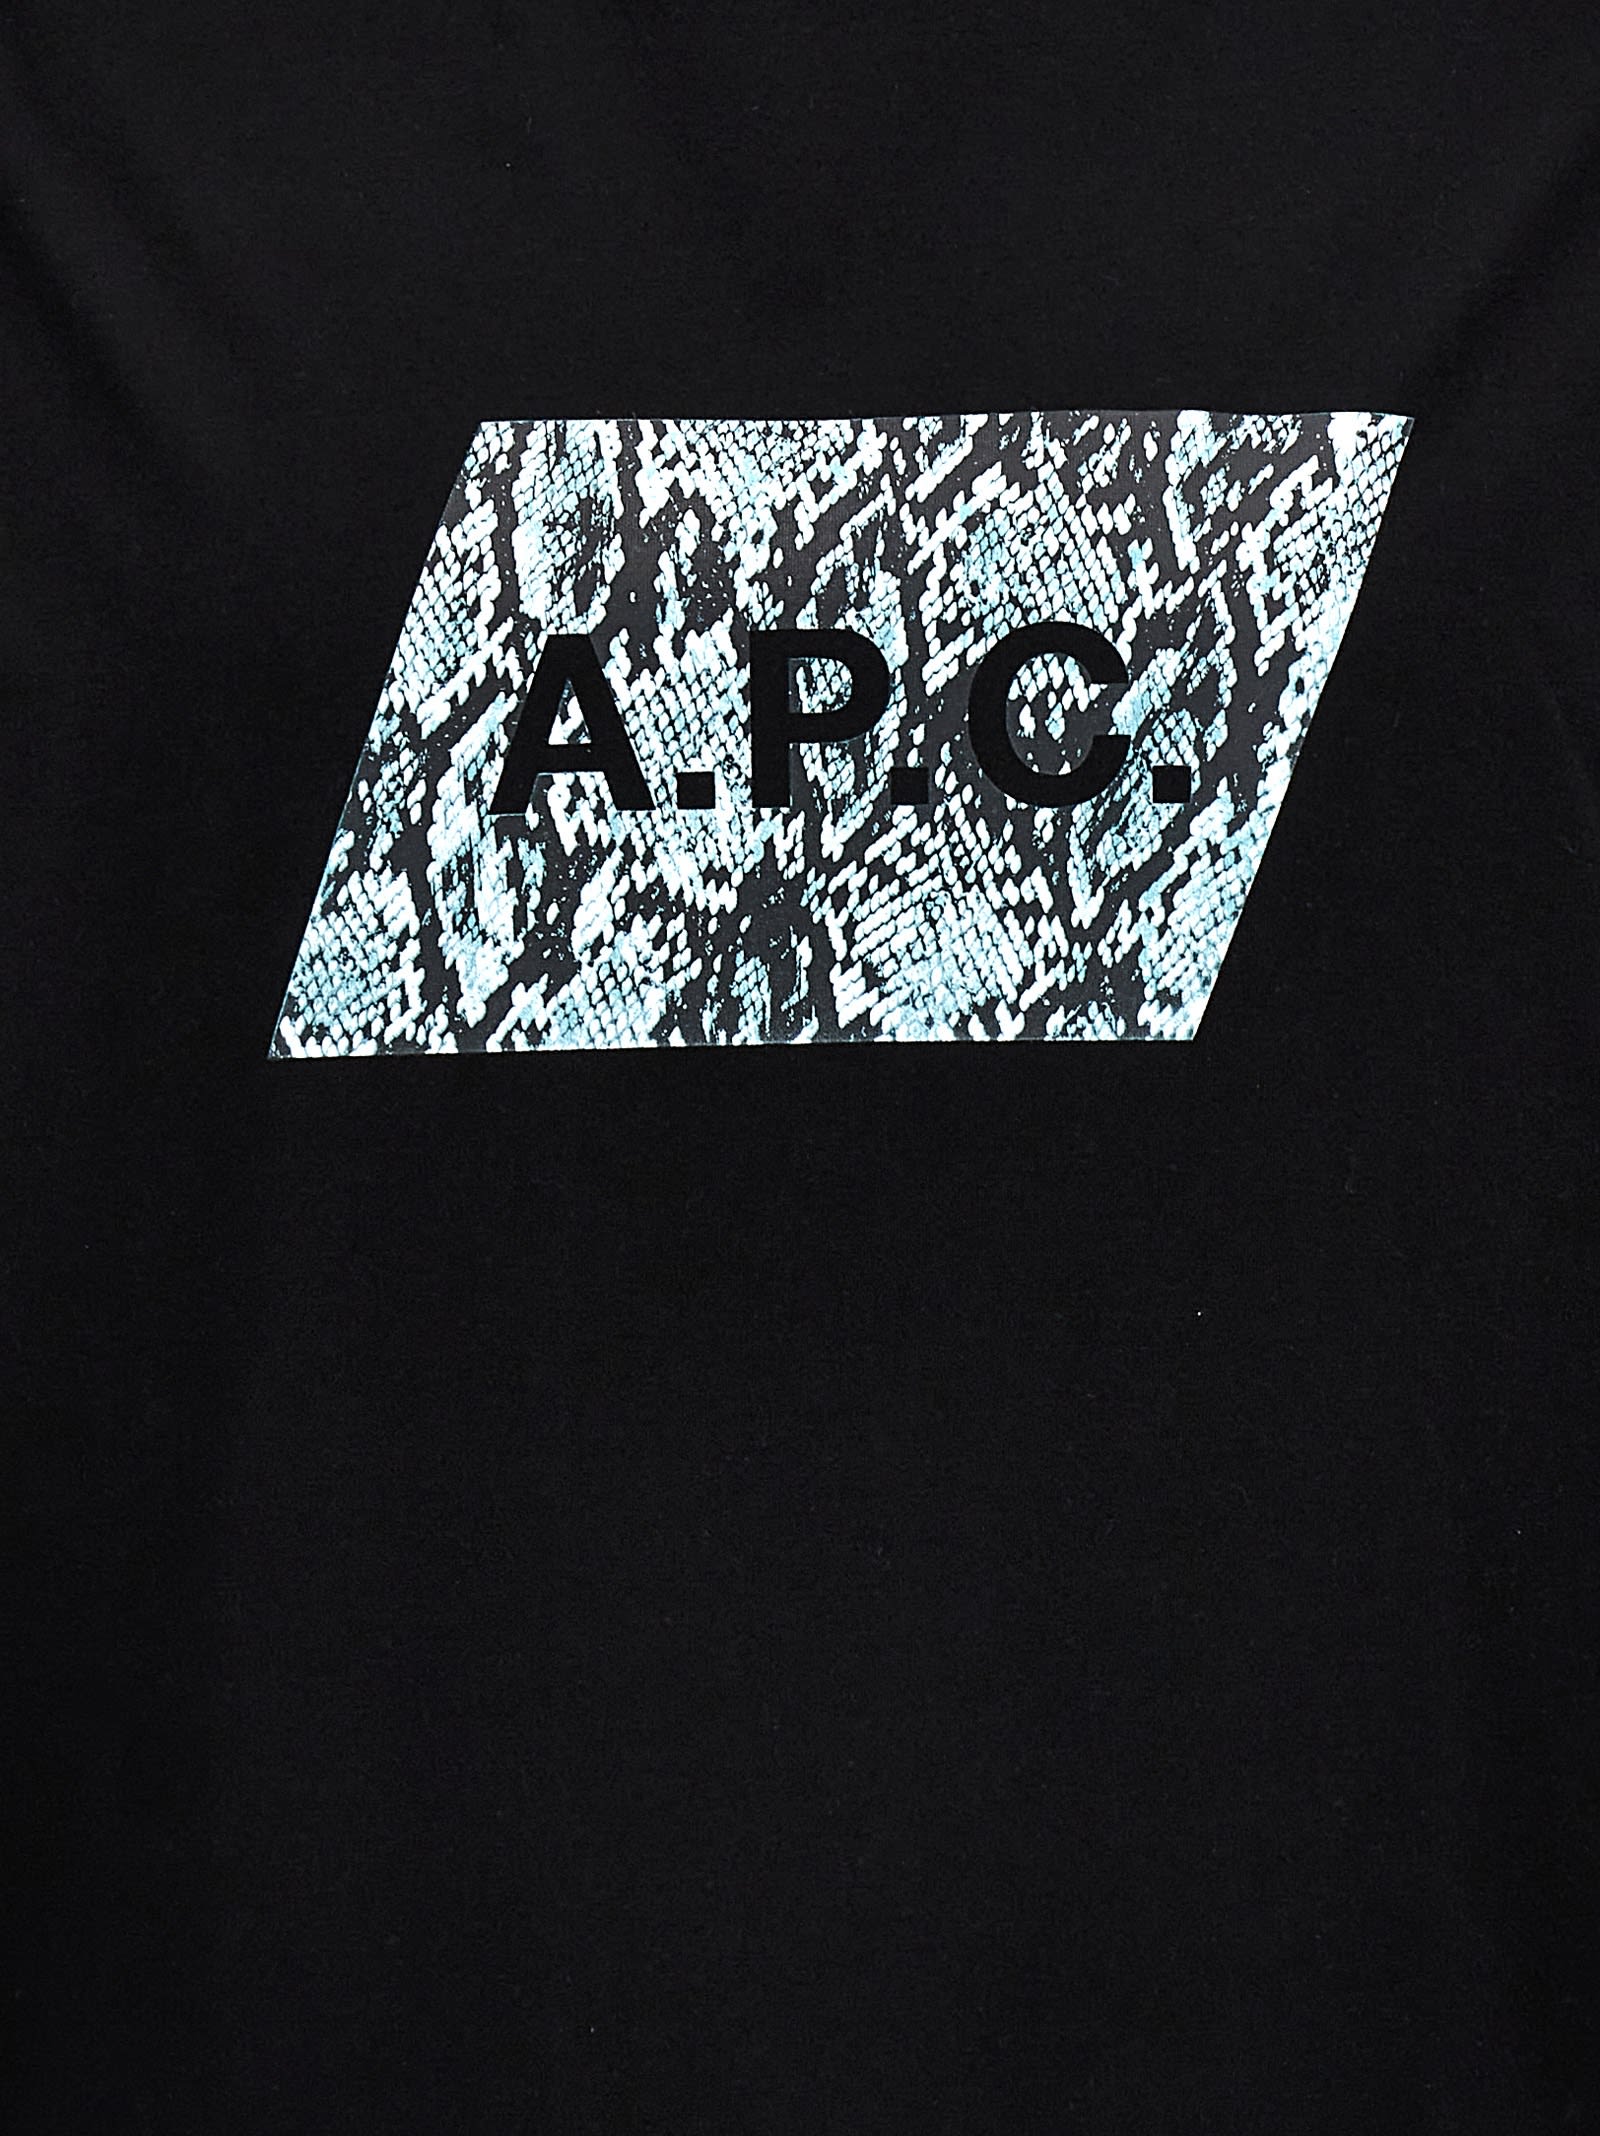 Shop Apc Cobra T-shirt In Nero